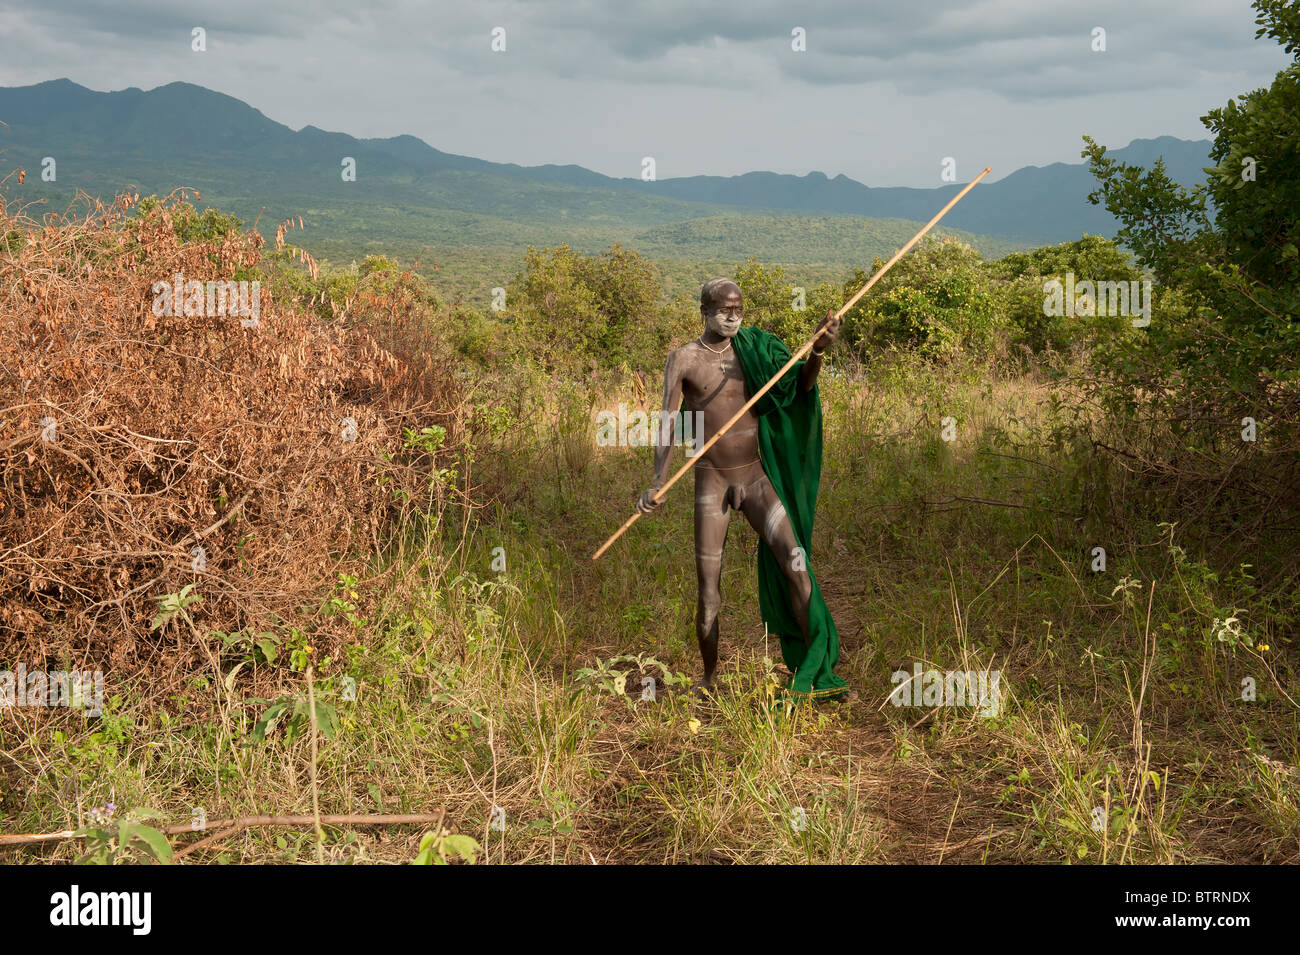 Exercising Surma Donga fighter, Tulgit, Omo River Valley, Ethiopia Stock Photo